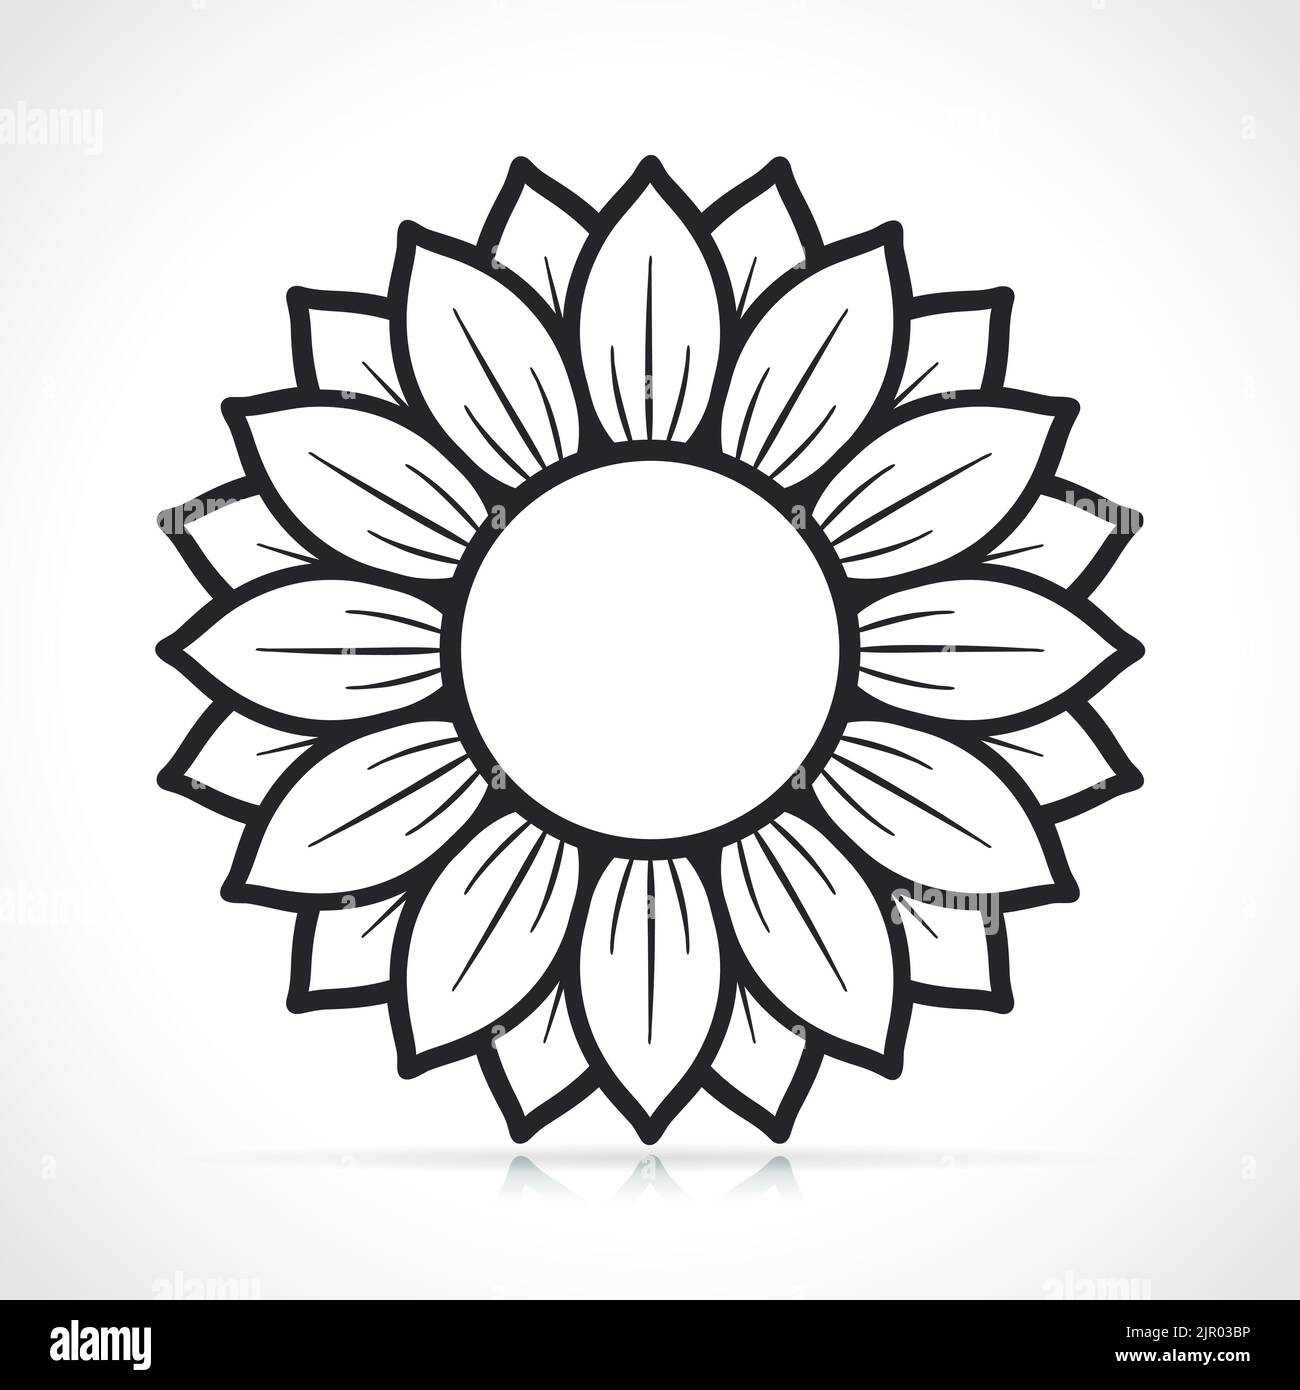 sunflower black and white illustration isolated design Stock Vector